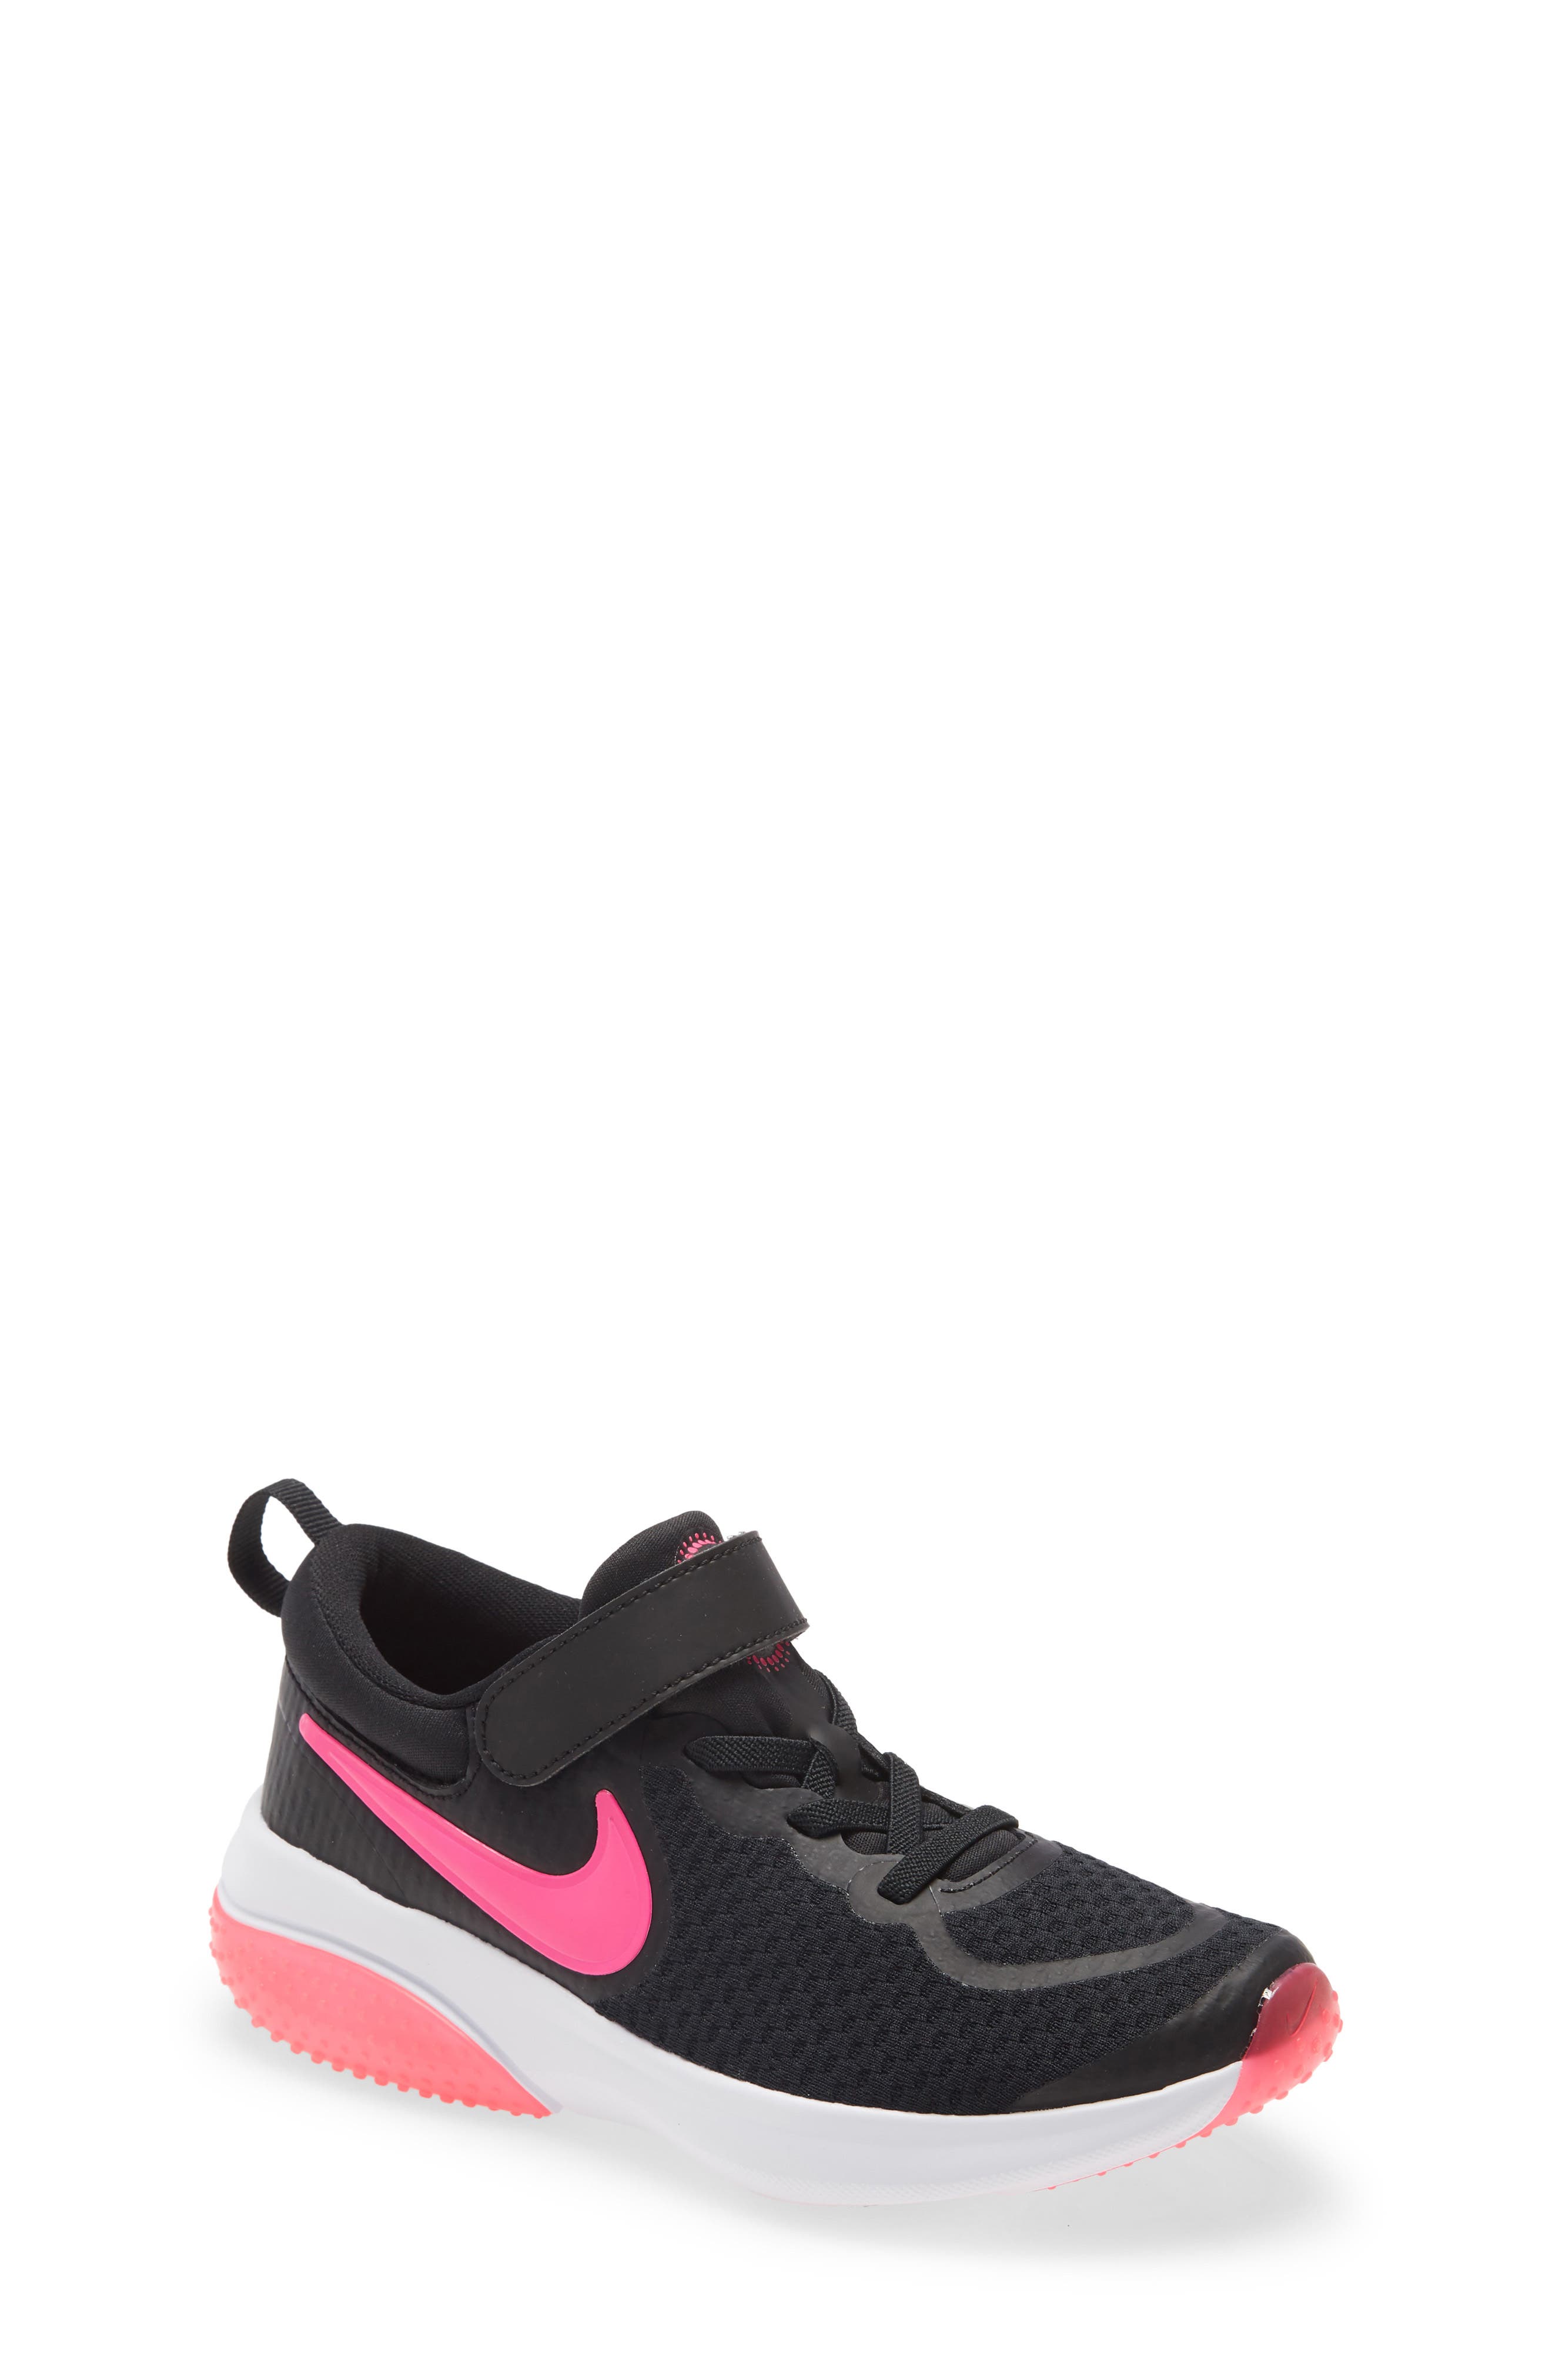 Girls' Sneakers, Tennis Shoes 